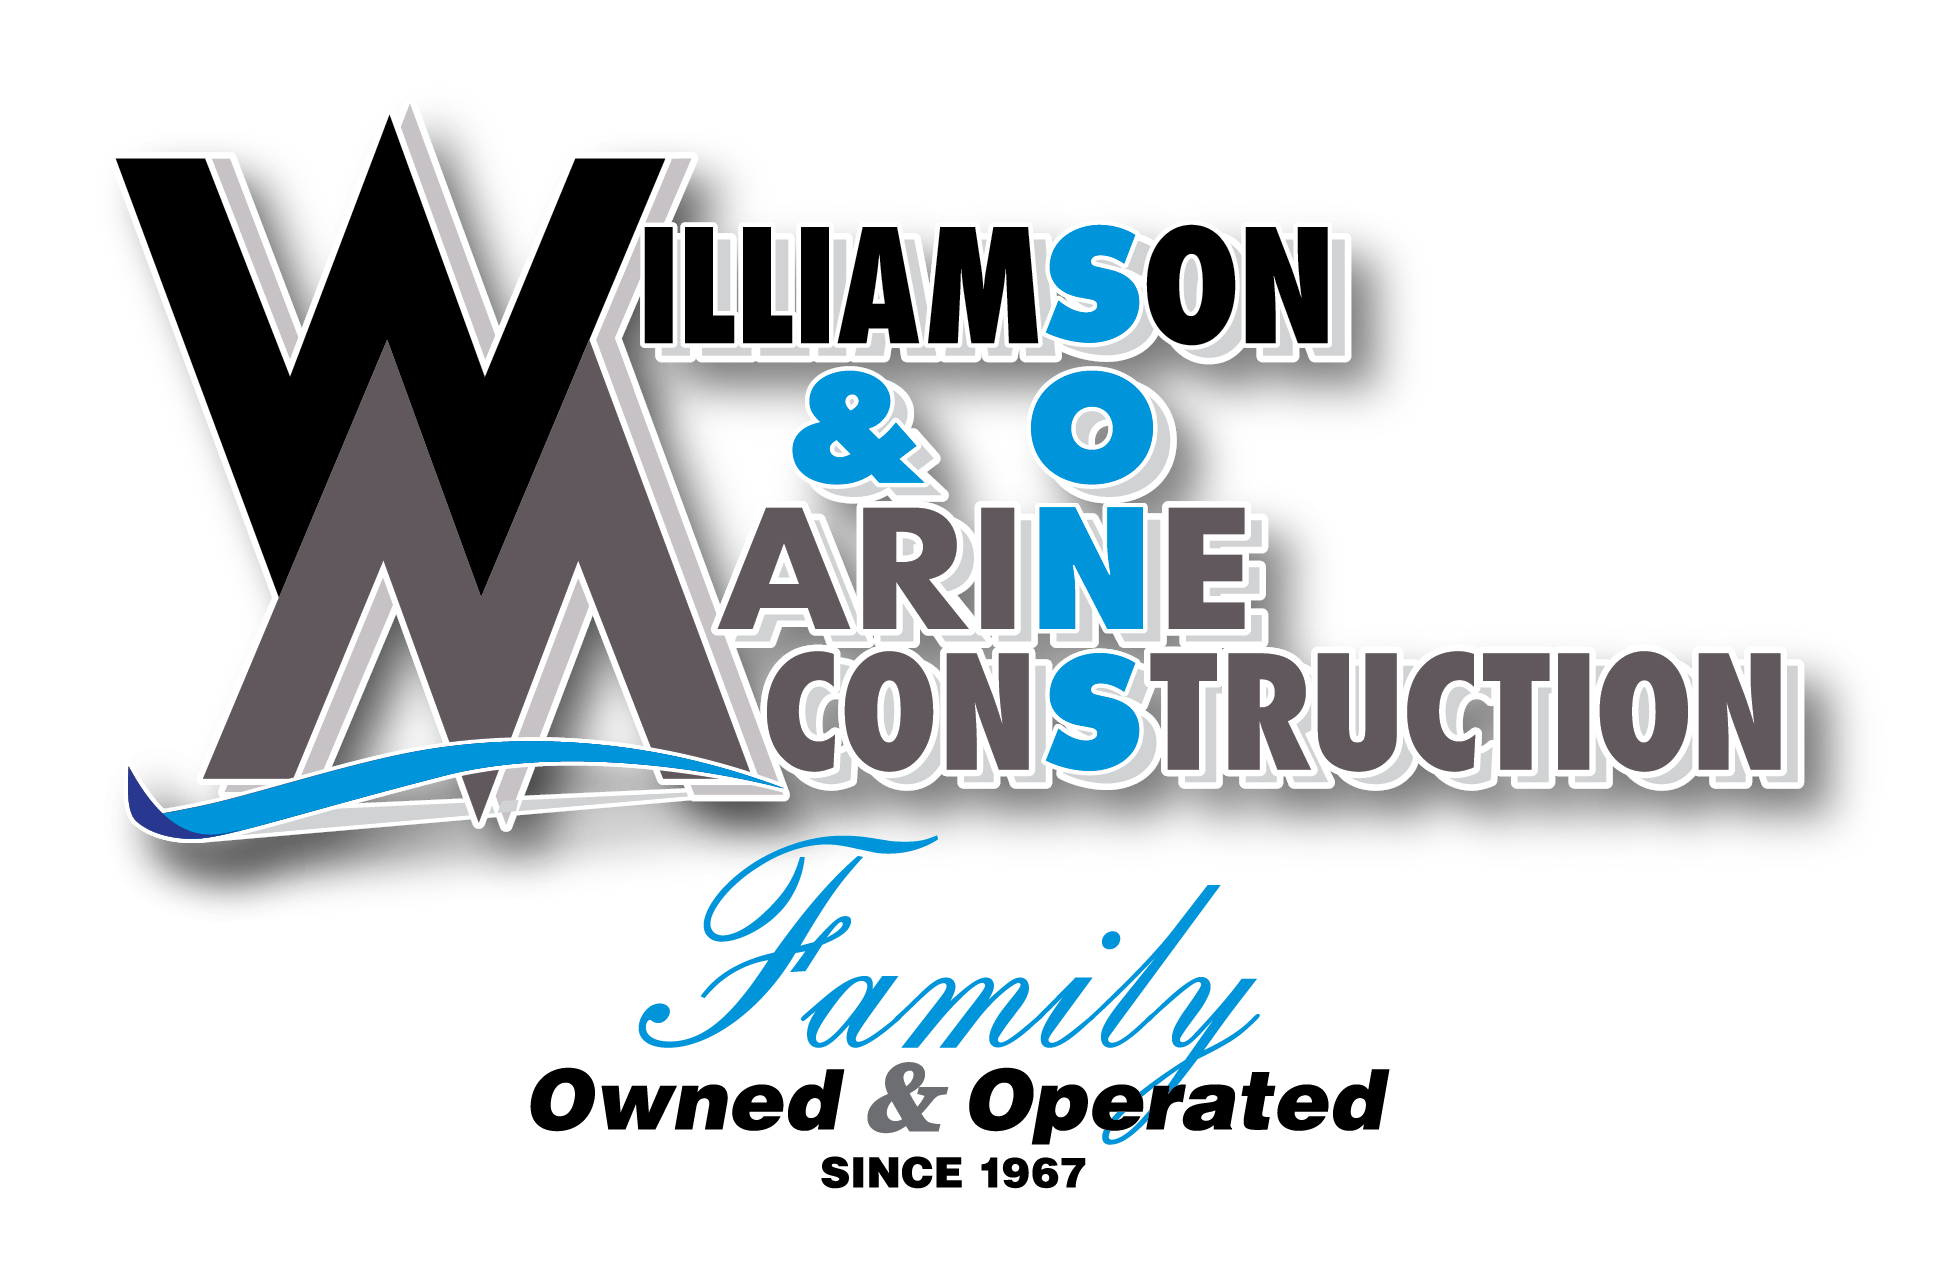 Williamson & Sons Marine Construction